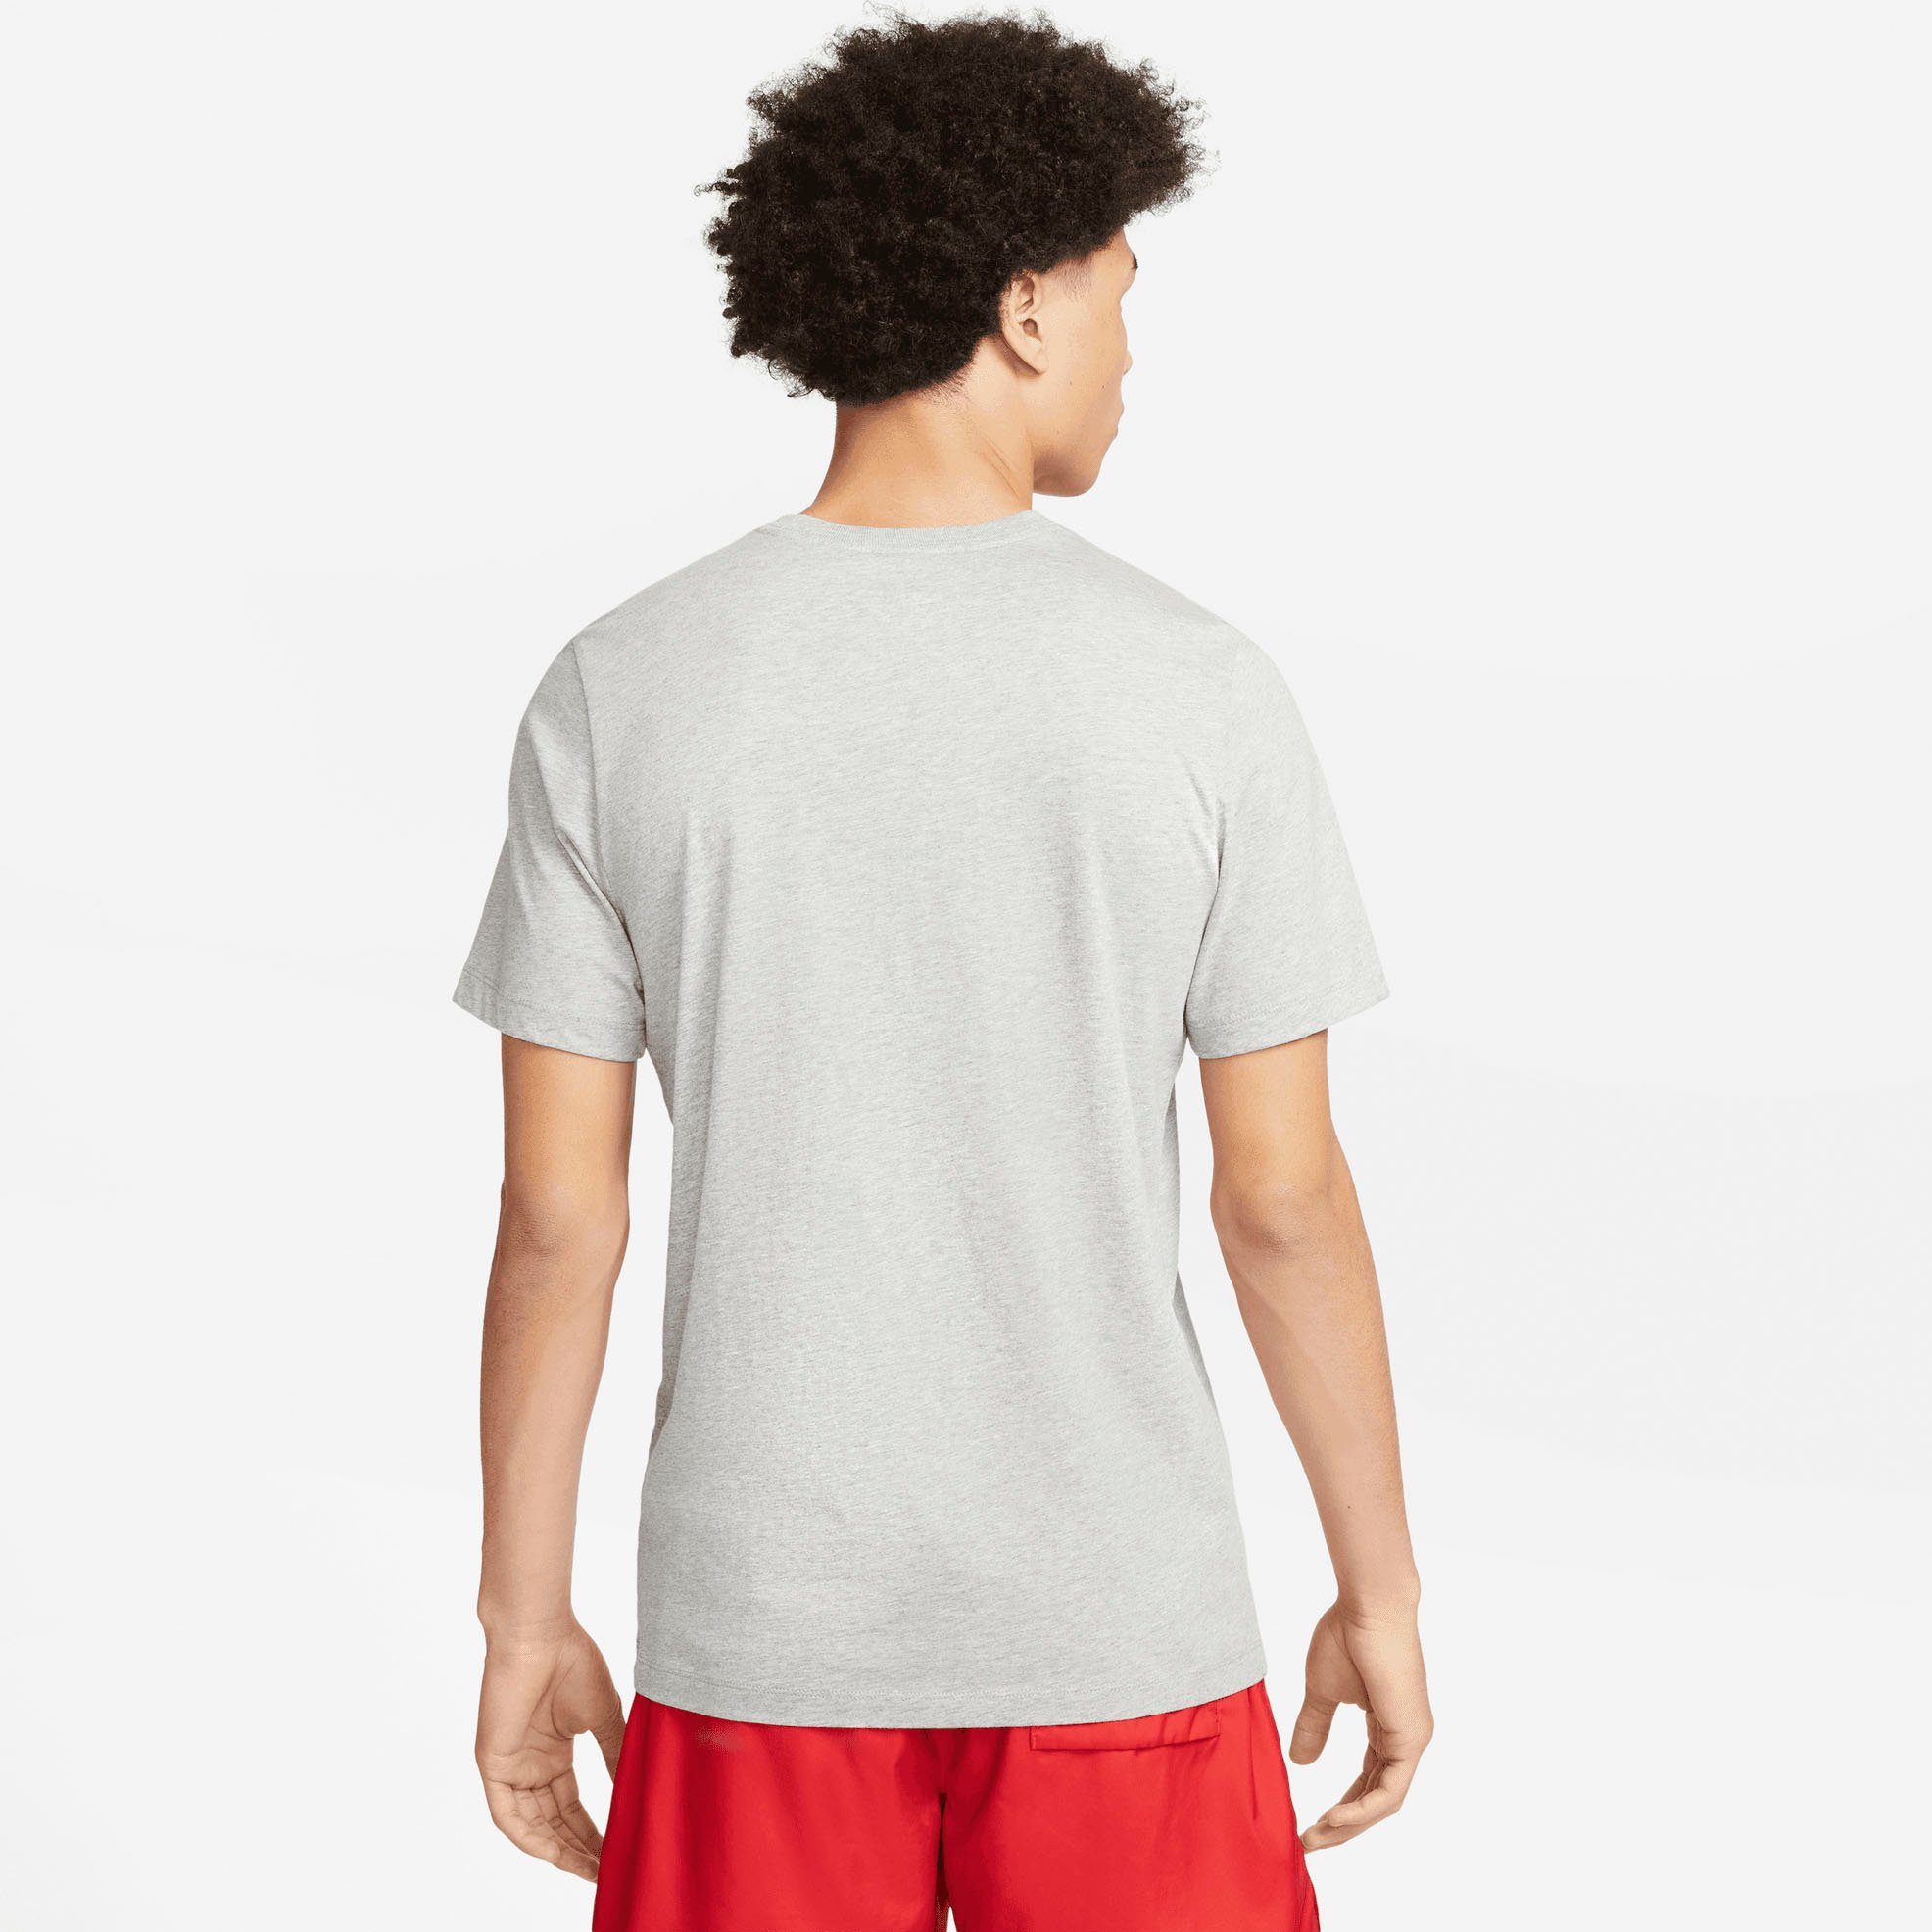 Nike Sportswear T-Shirt T-Shirt GREY DK HEATHER Men's